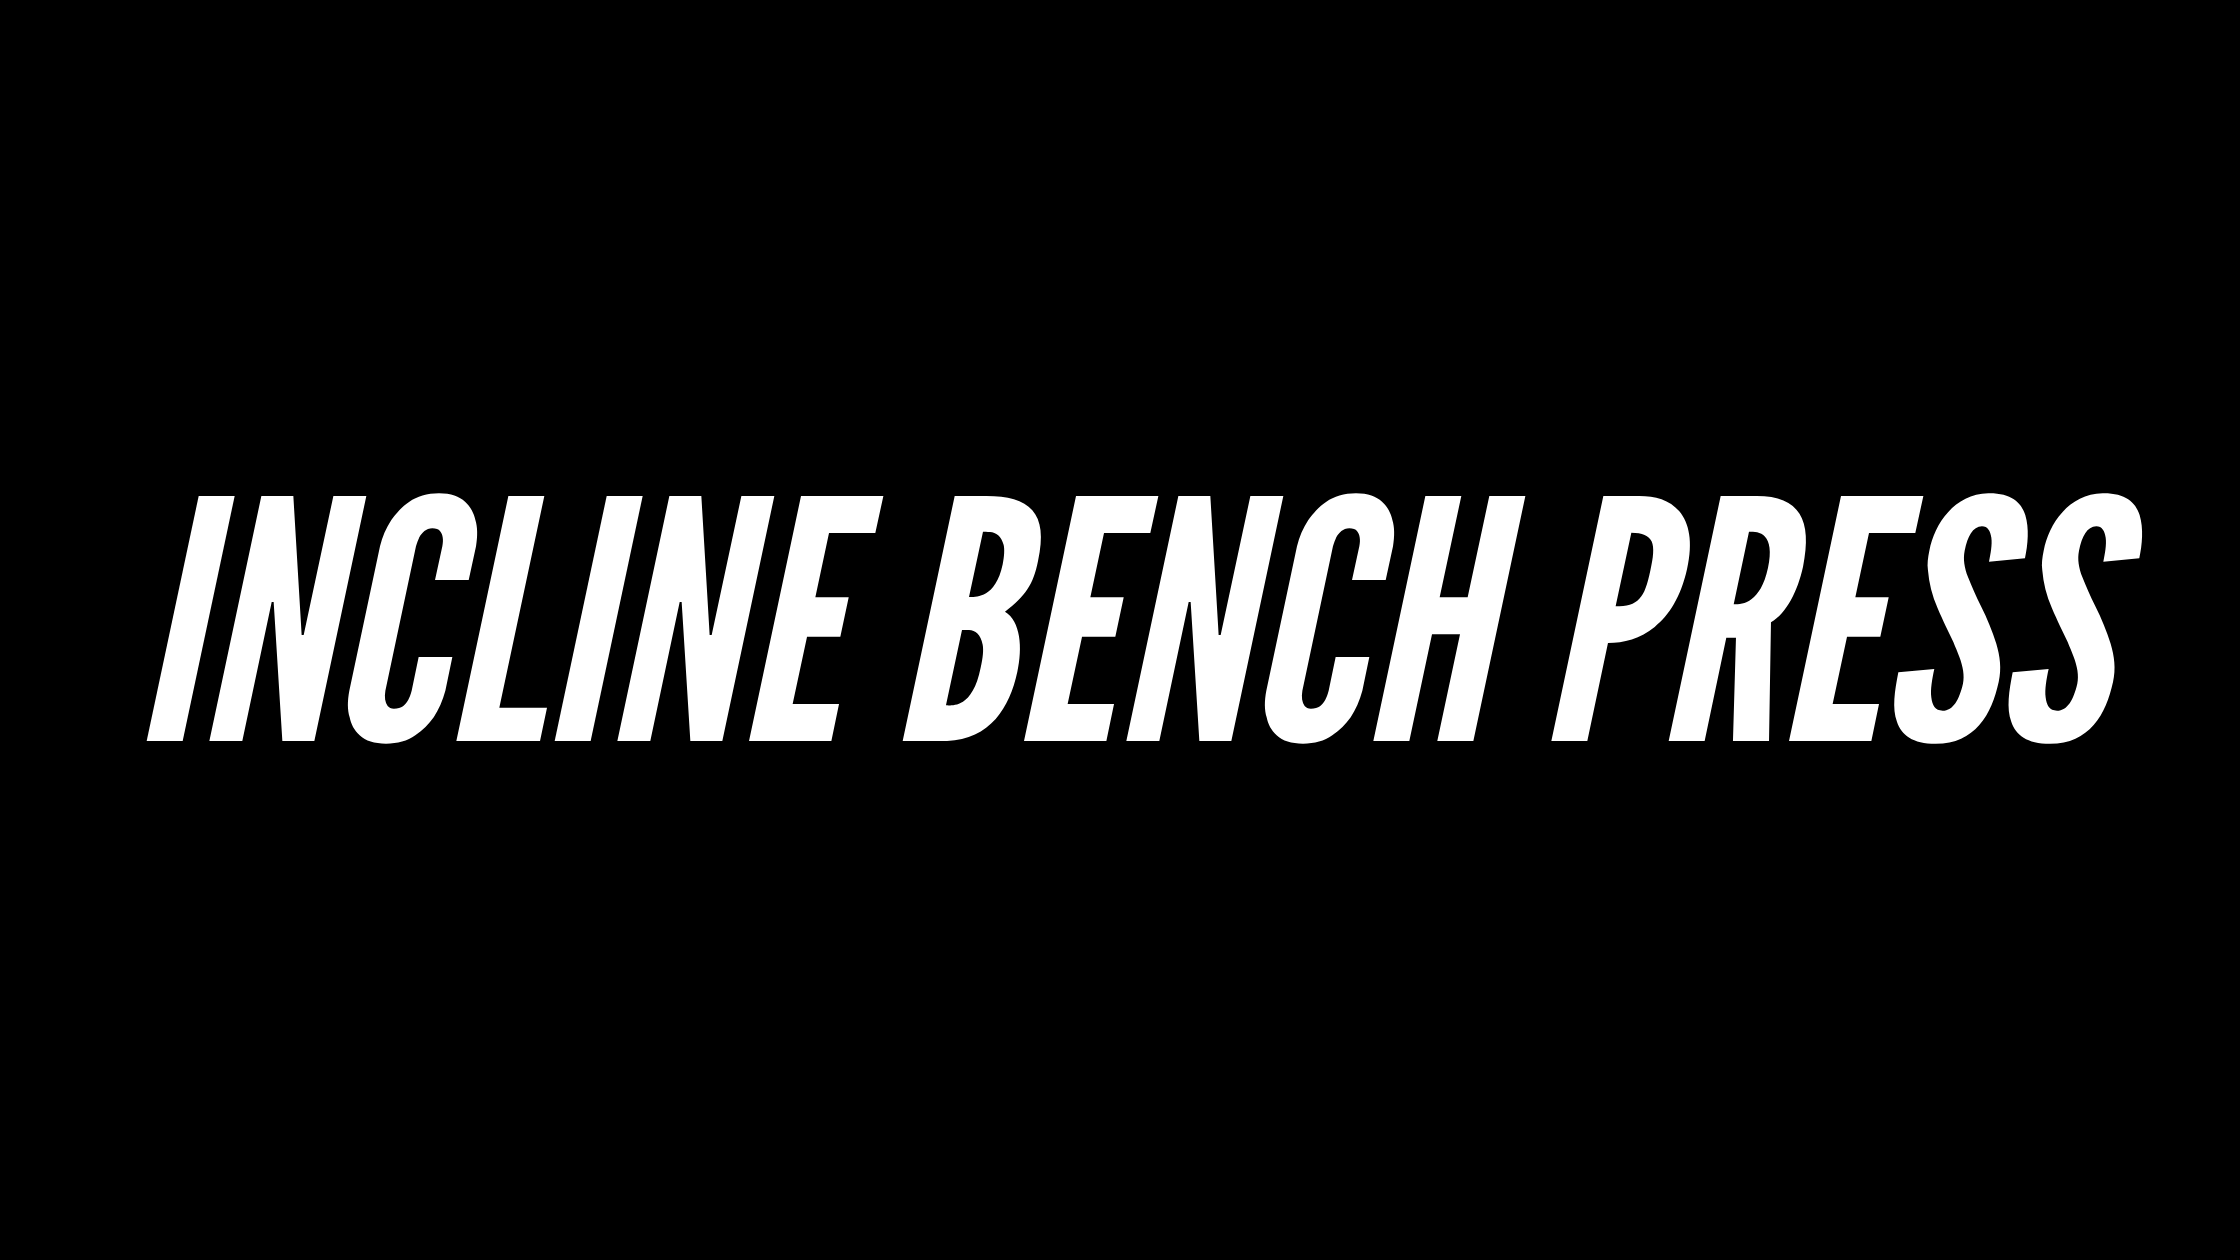 incline-bench-press